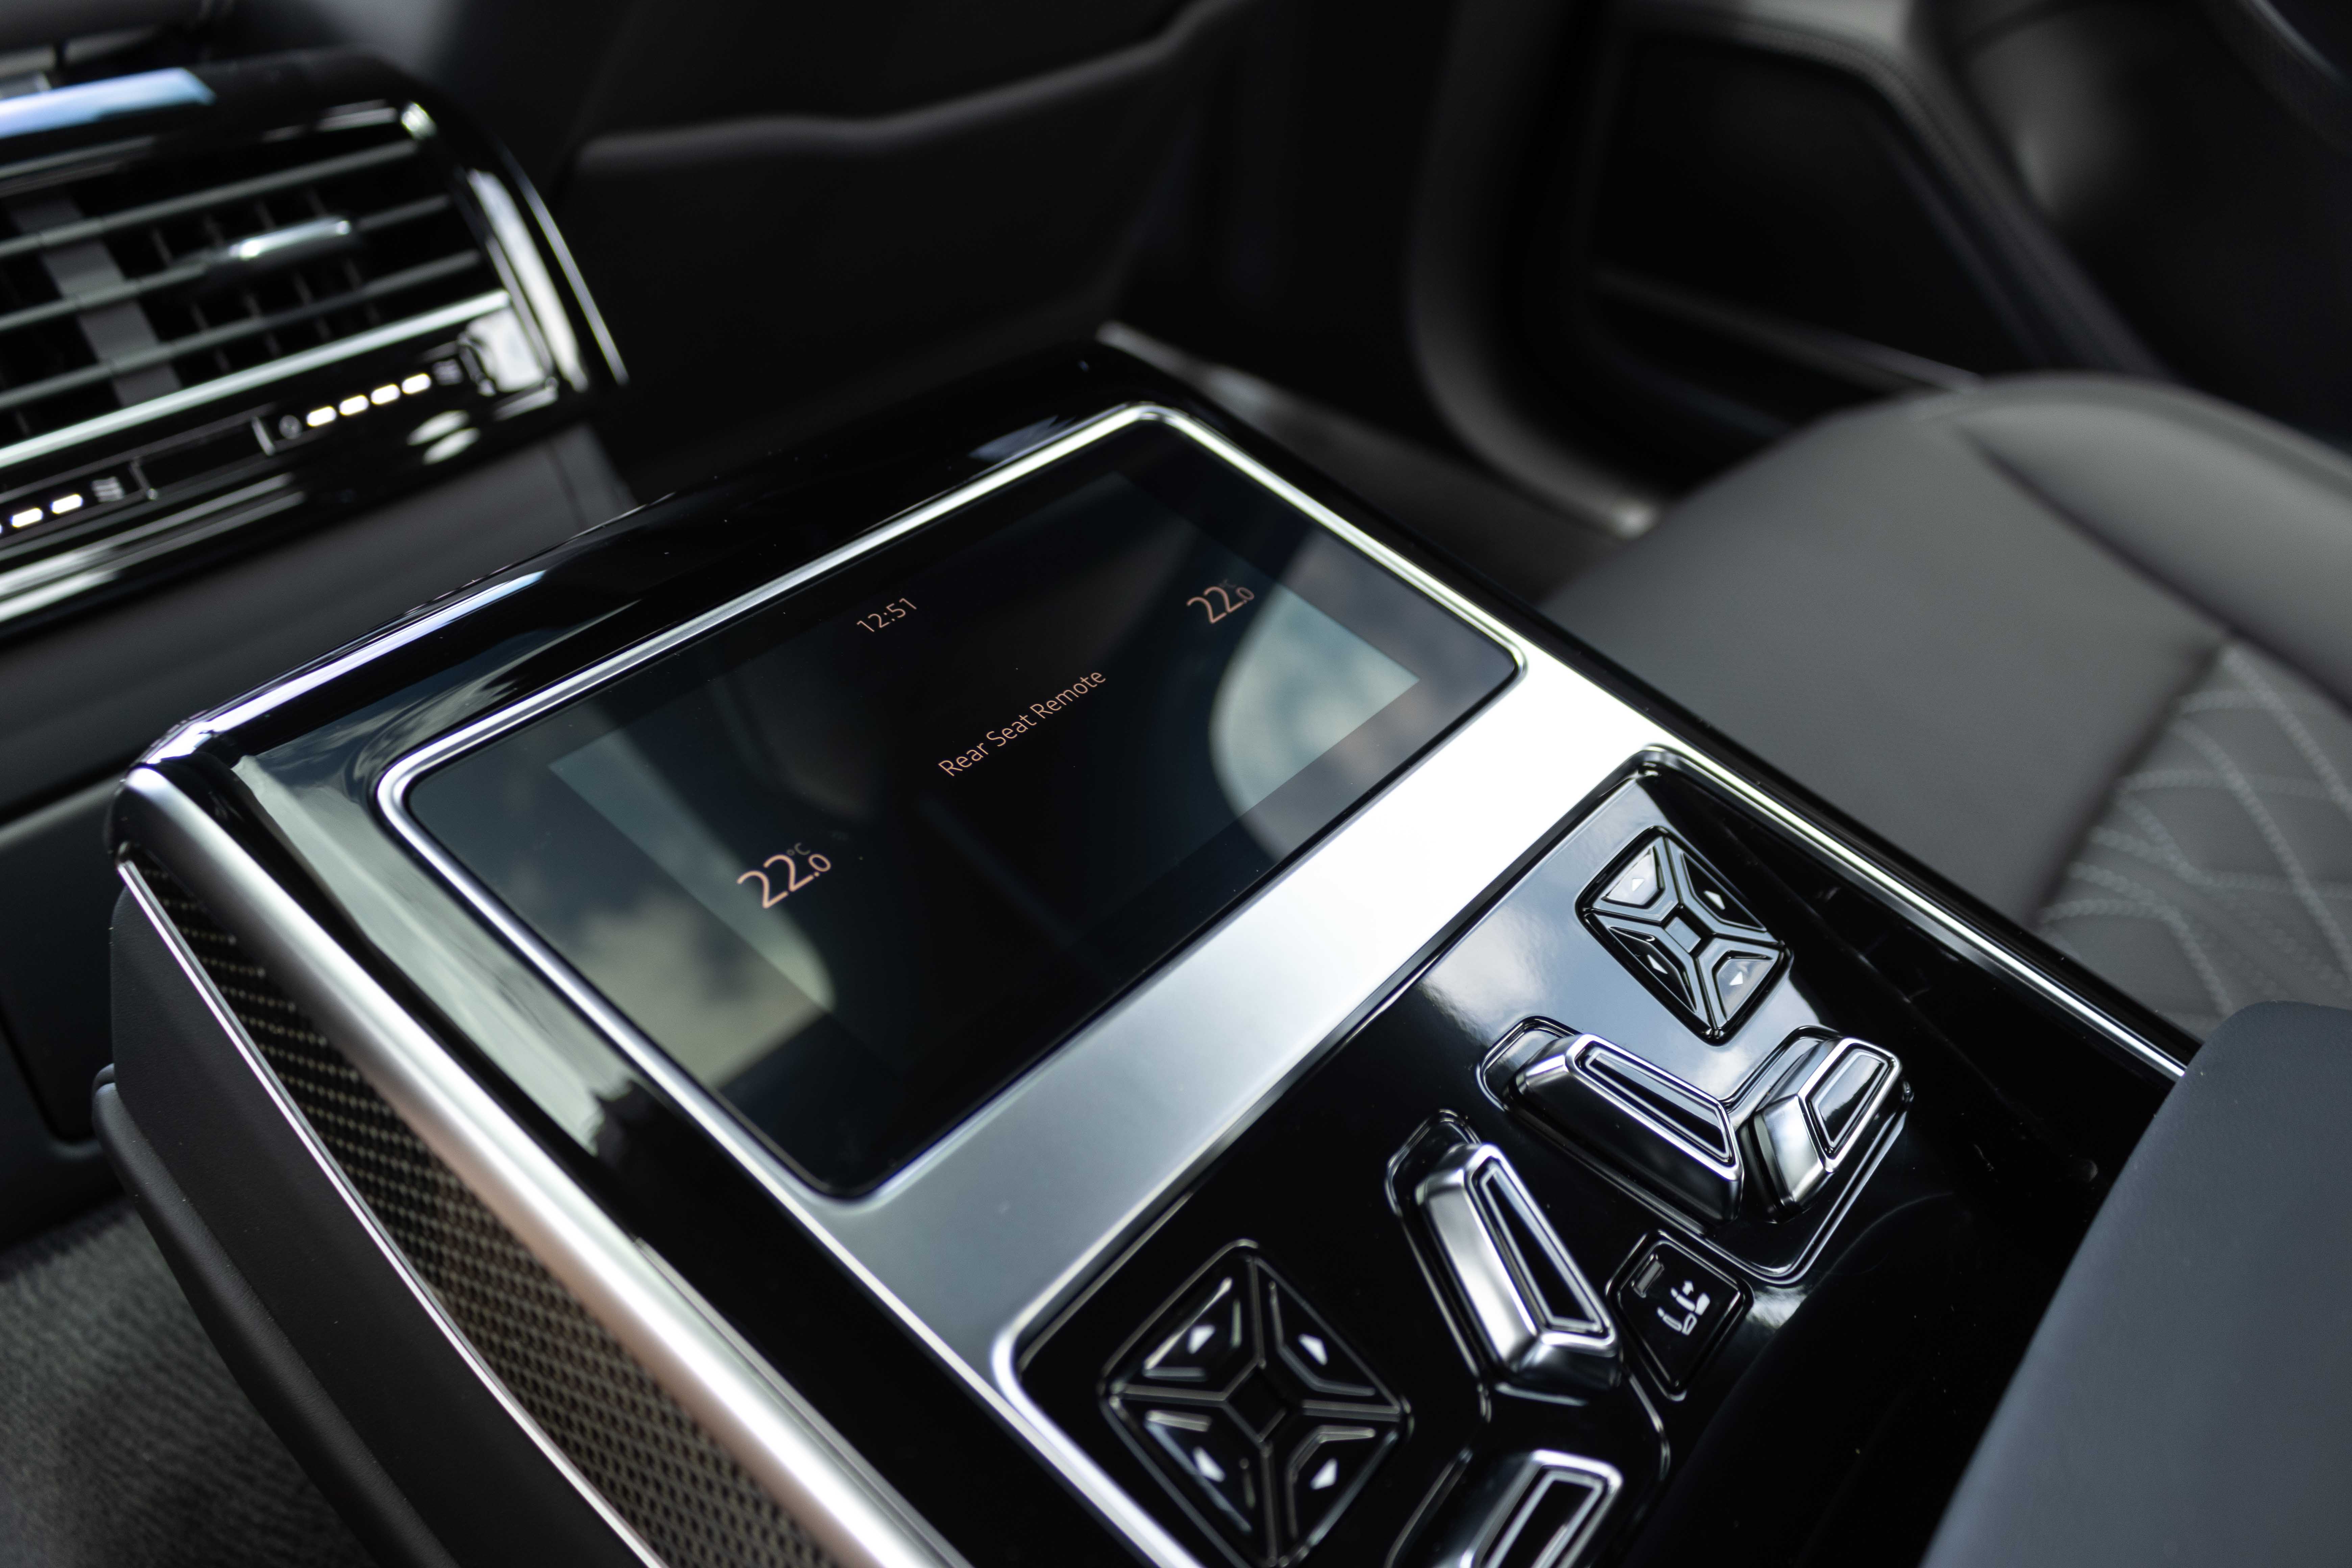 Audi S8 Singapore - Rear seat controls